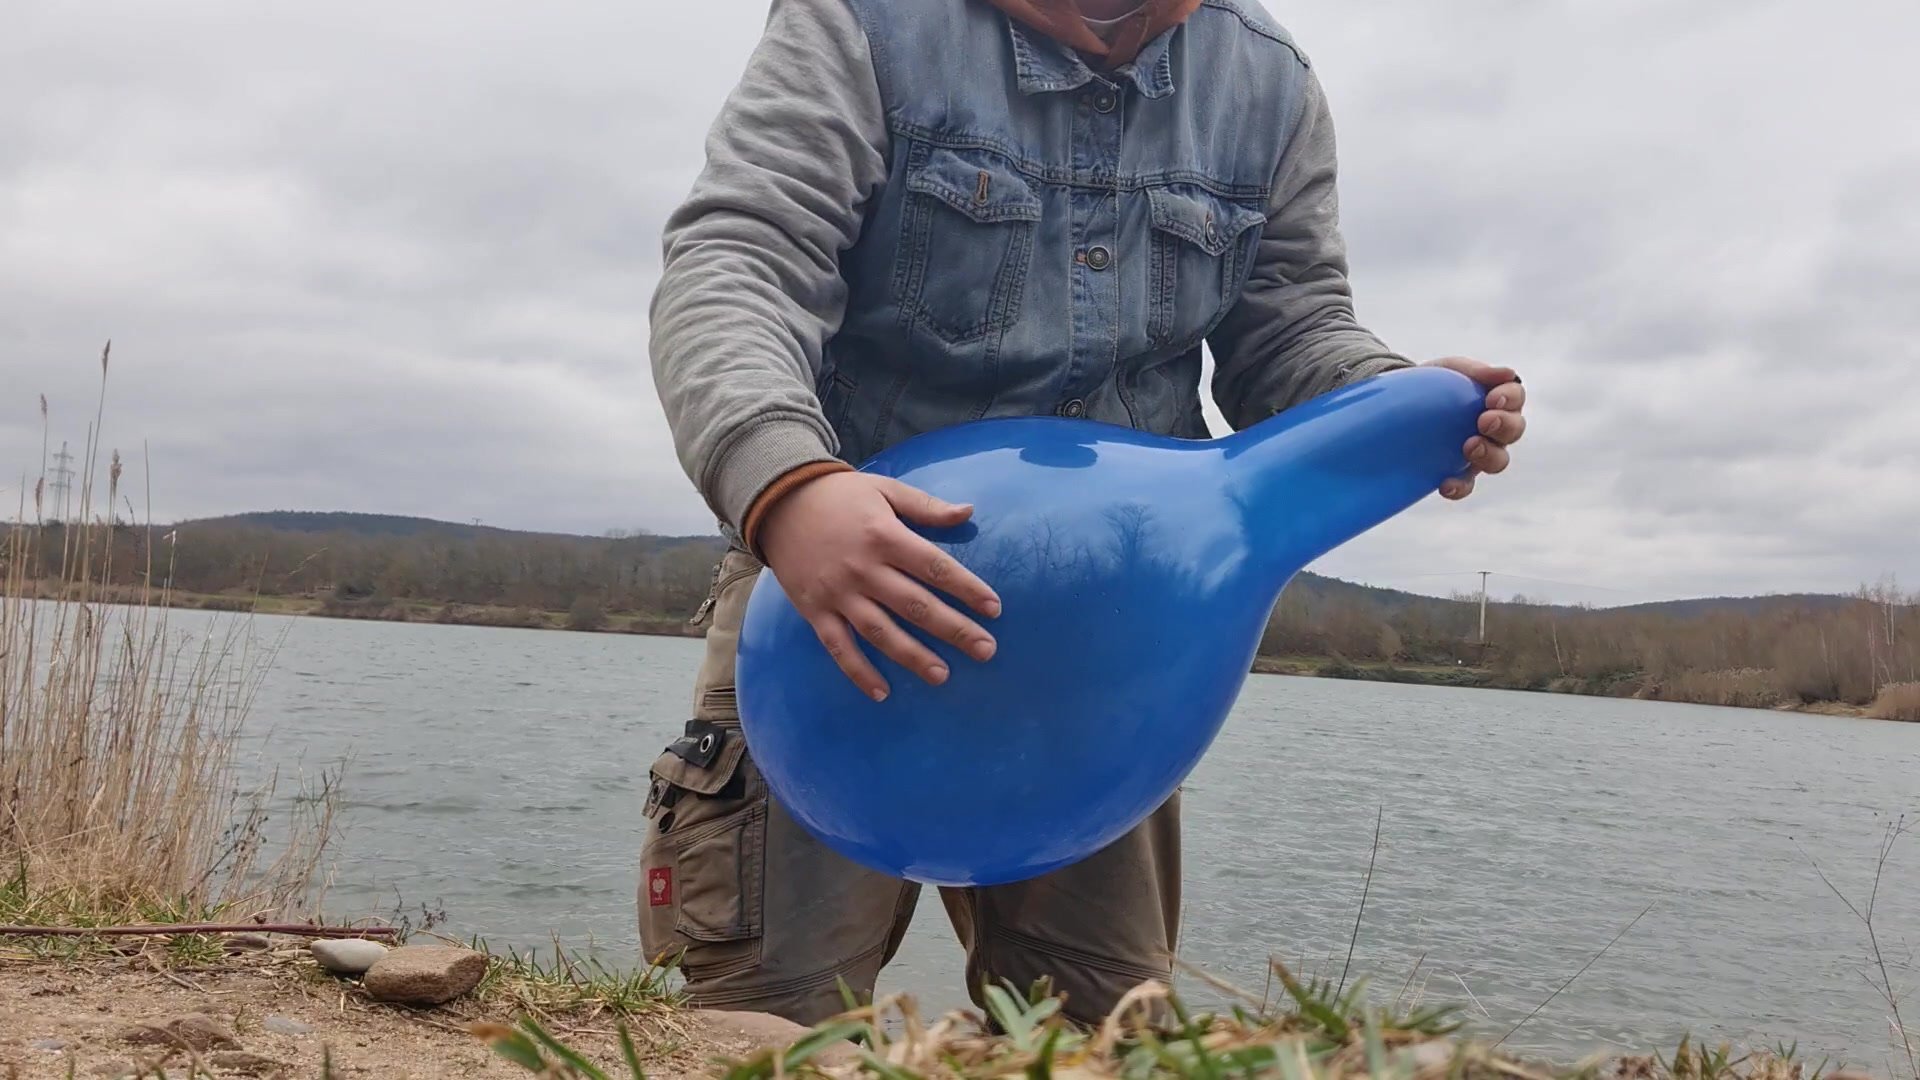 Looner blows outdoor nonpop a blue 14" balloon